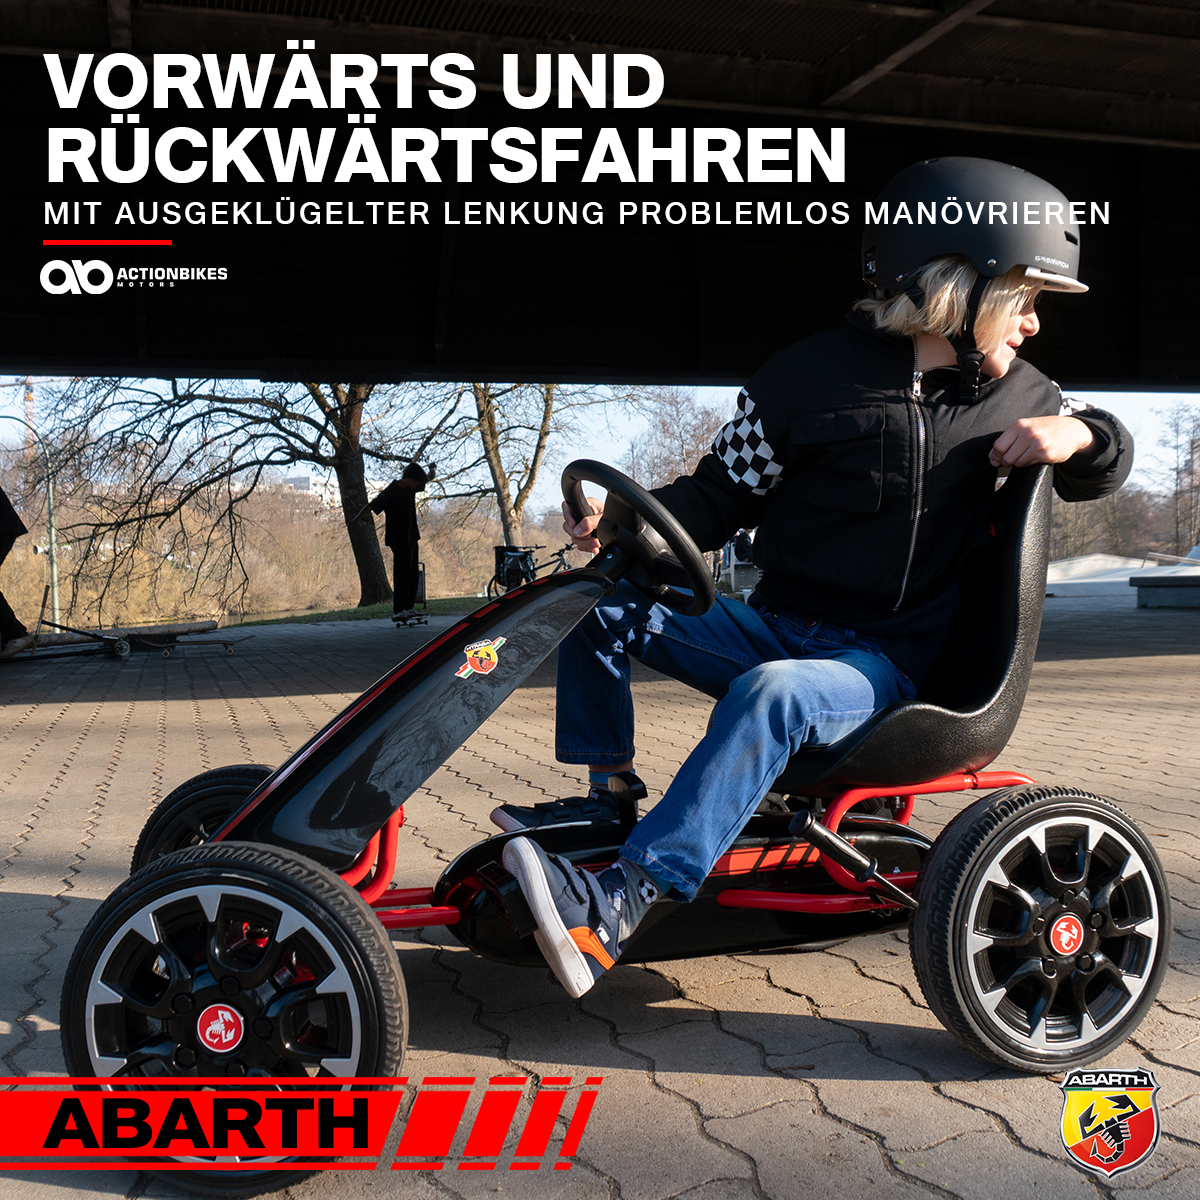 FS595 ACTIONBIKES Go-Kart Abarth MOTORS